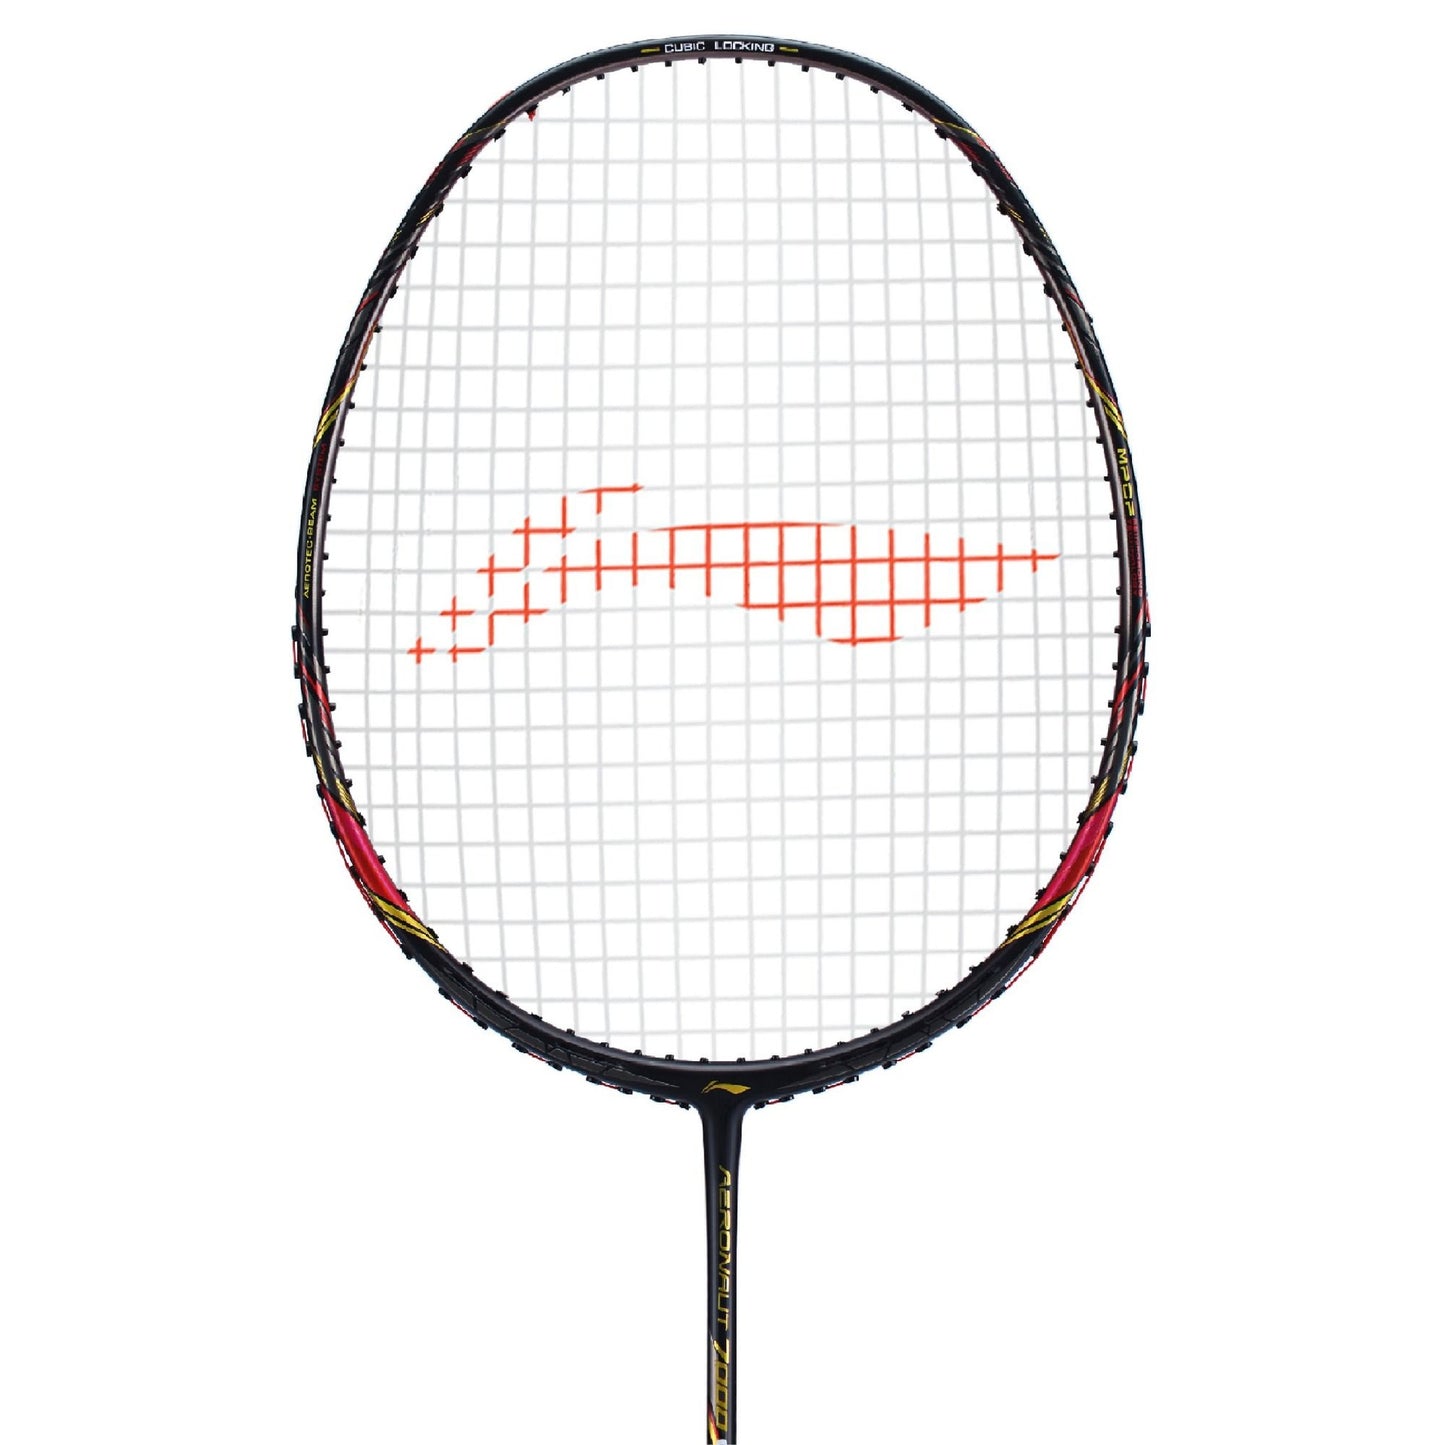 Li-Ning Aeronaut 7000C Combat Badminton Racquet - Black/Red - Best Price online Prokicksports.com